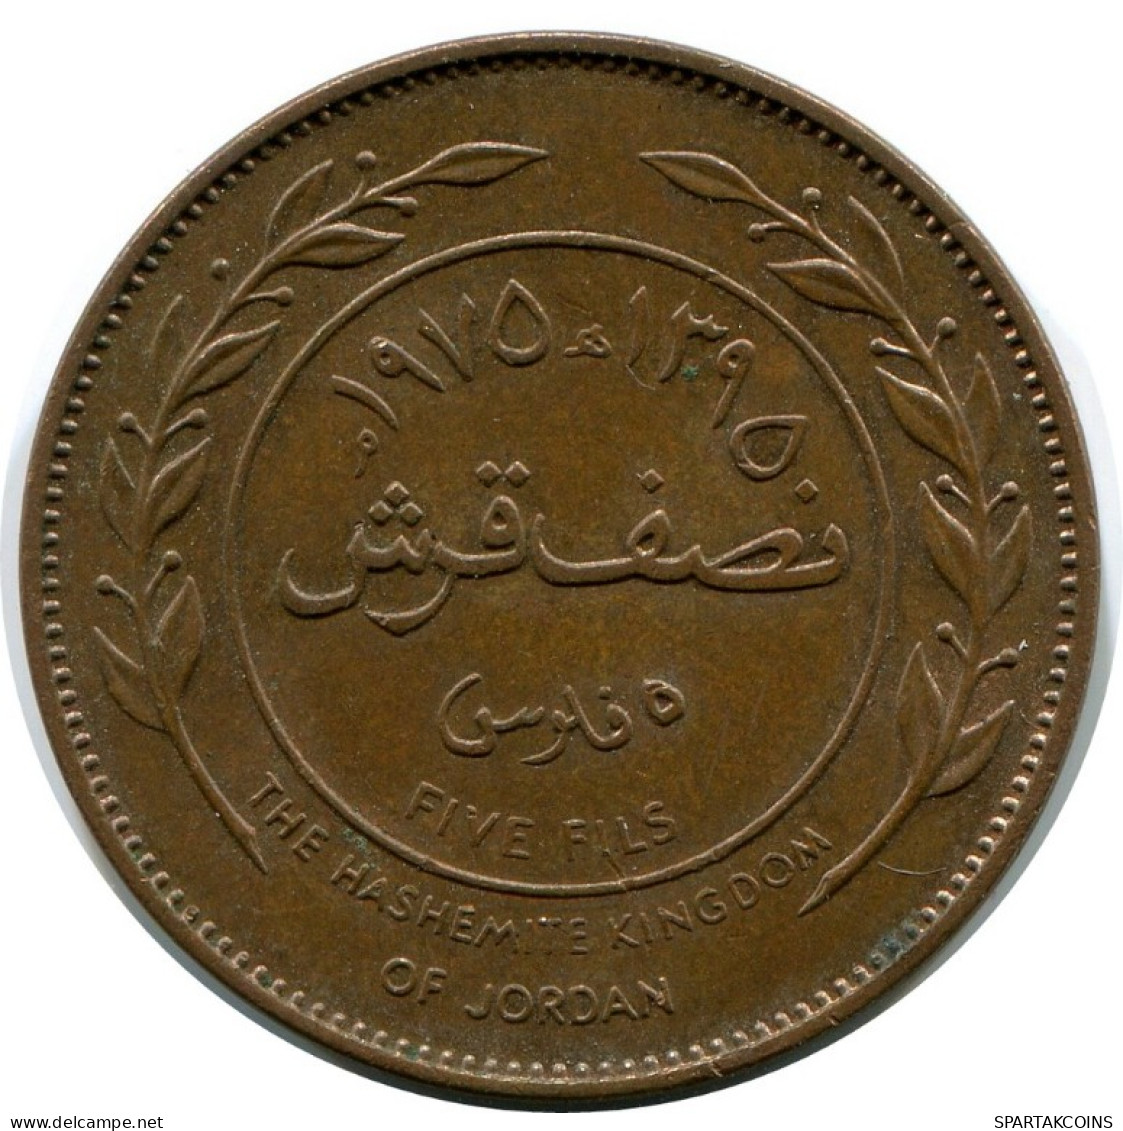 5 FILS 1975 JORDAN Islamic Coin #AK152.U.A - Jordania